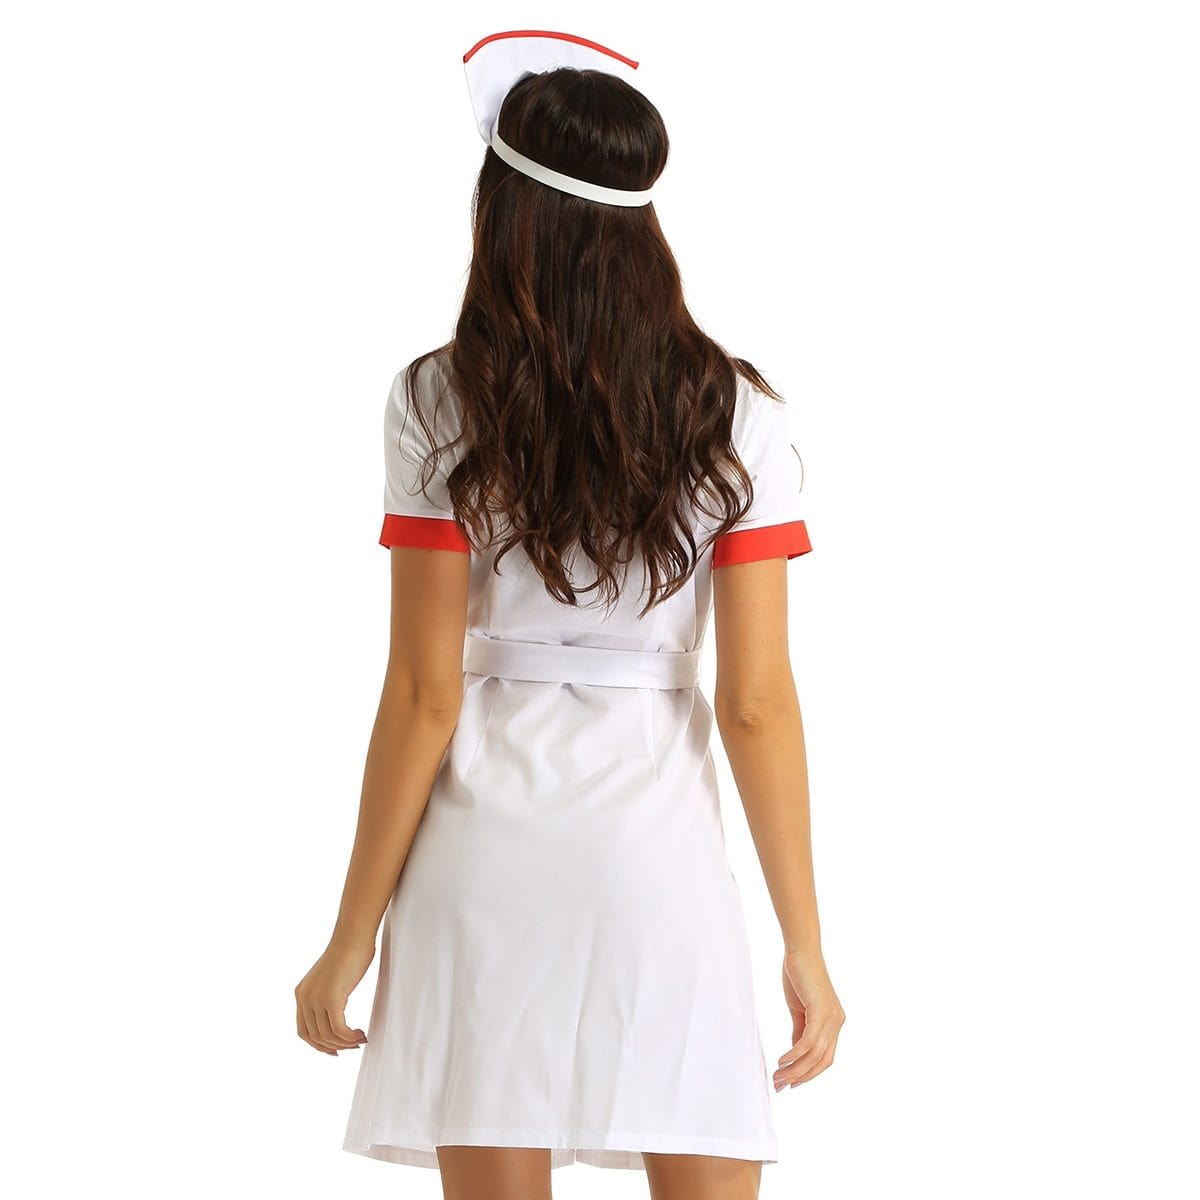 Lovely Nurse Costume Set - AMOROUSDRESS